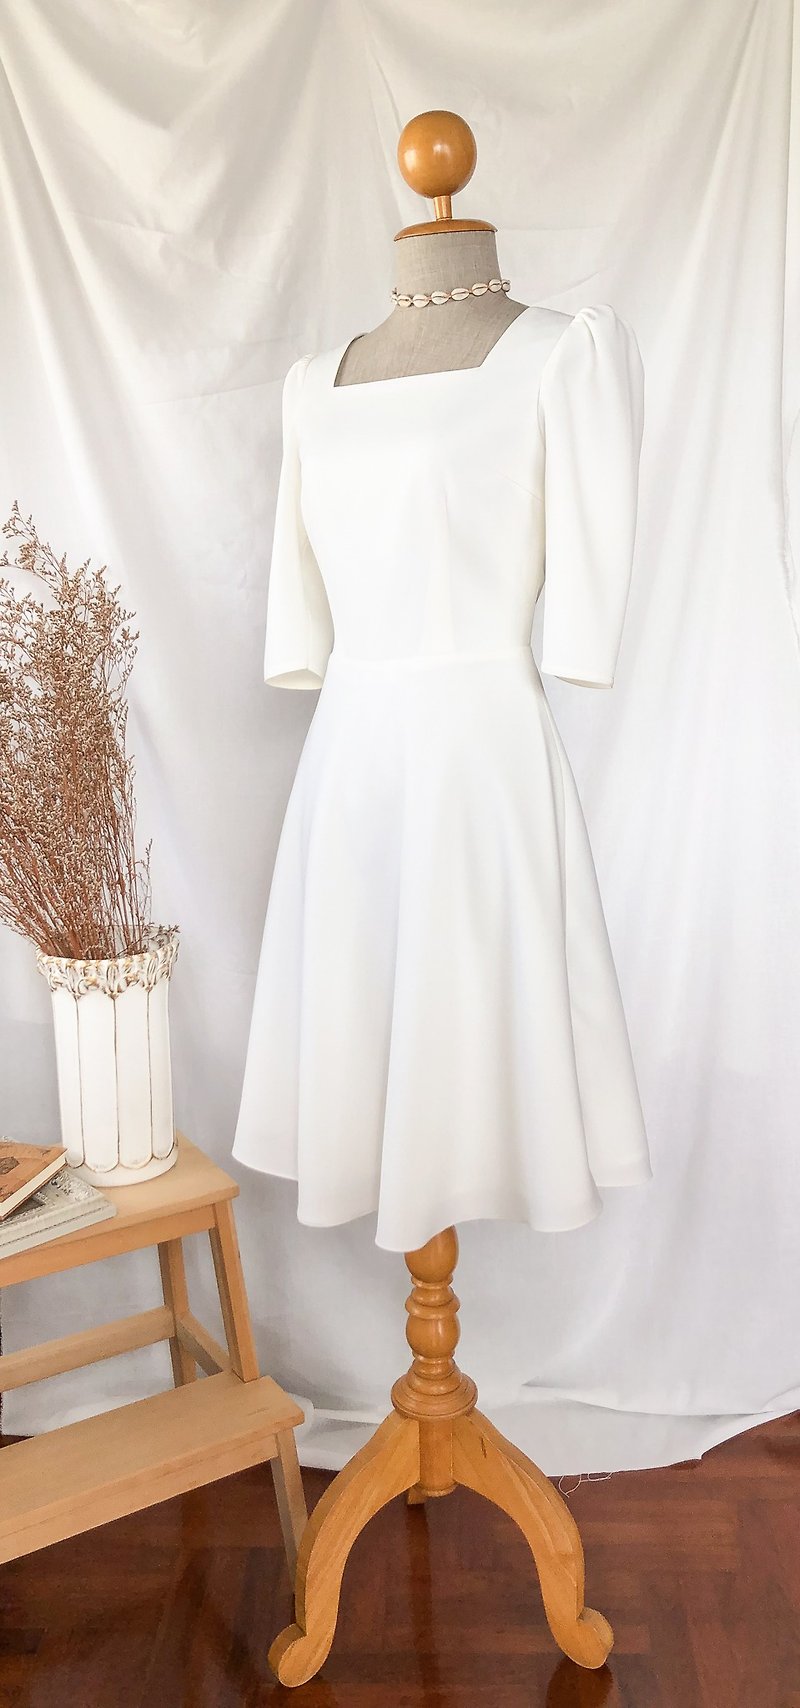 Modest White wedding dress vintage rustic Nordic bohemian white gown party dress - 洋装/连衣裙 - 聚酯纤维 白色